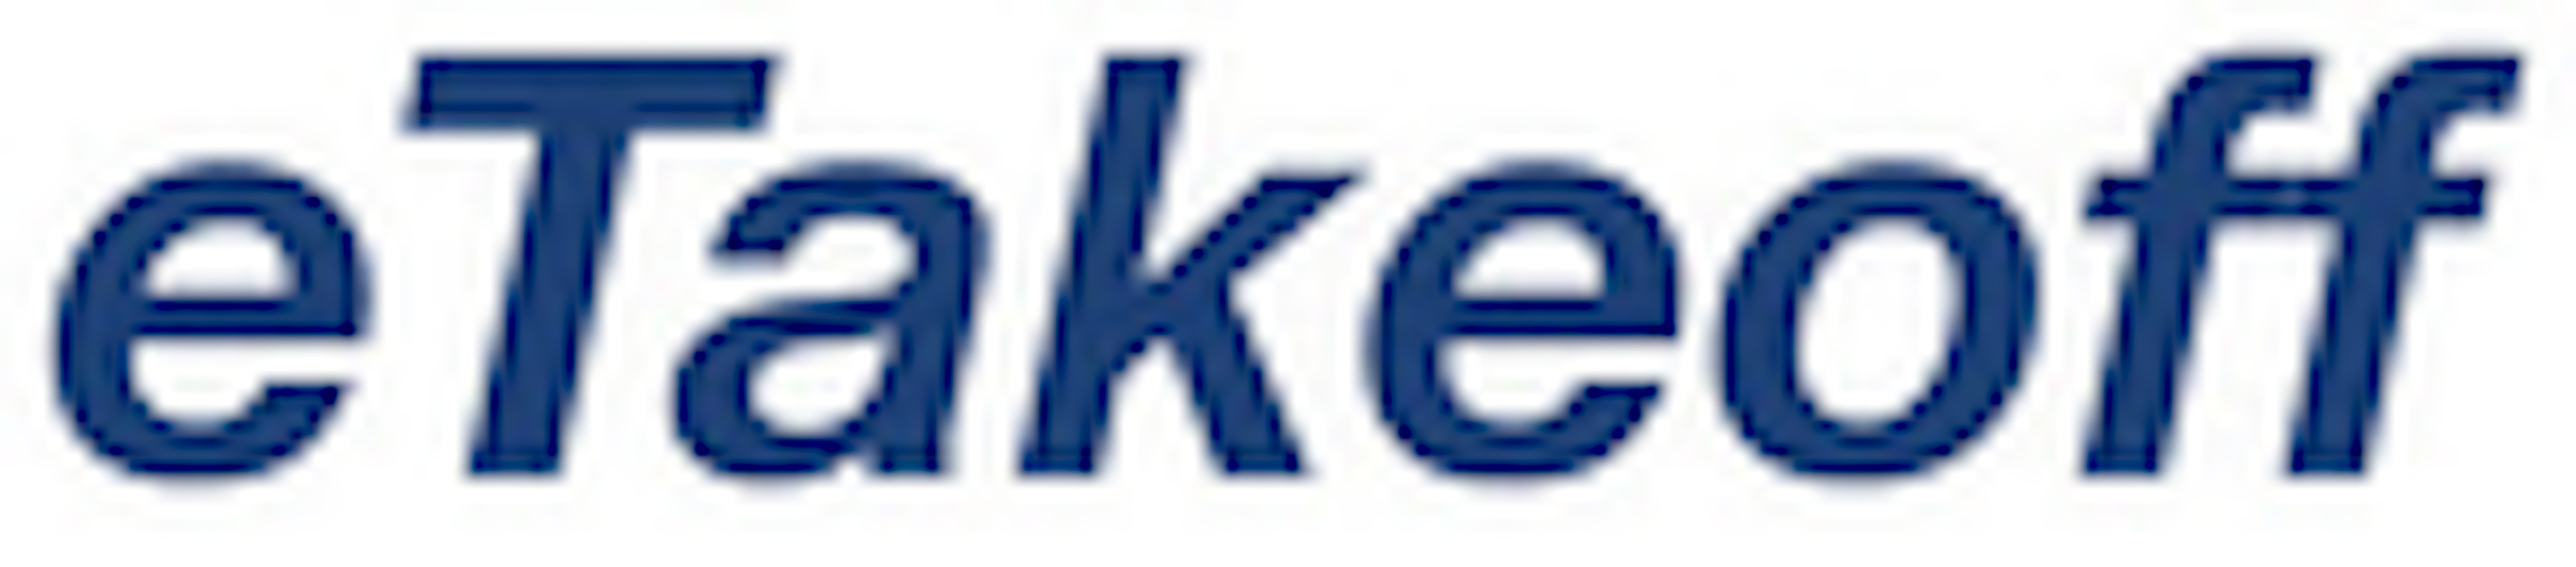 eTakeoff Logo